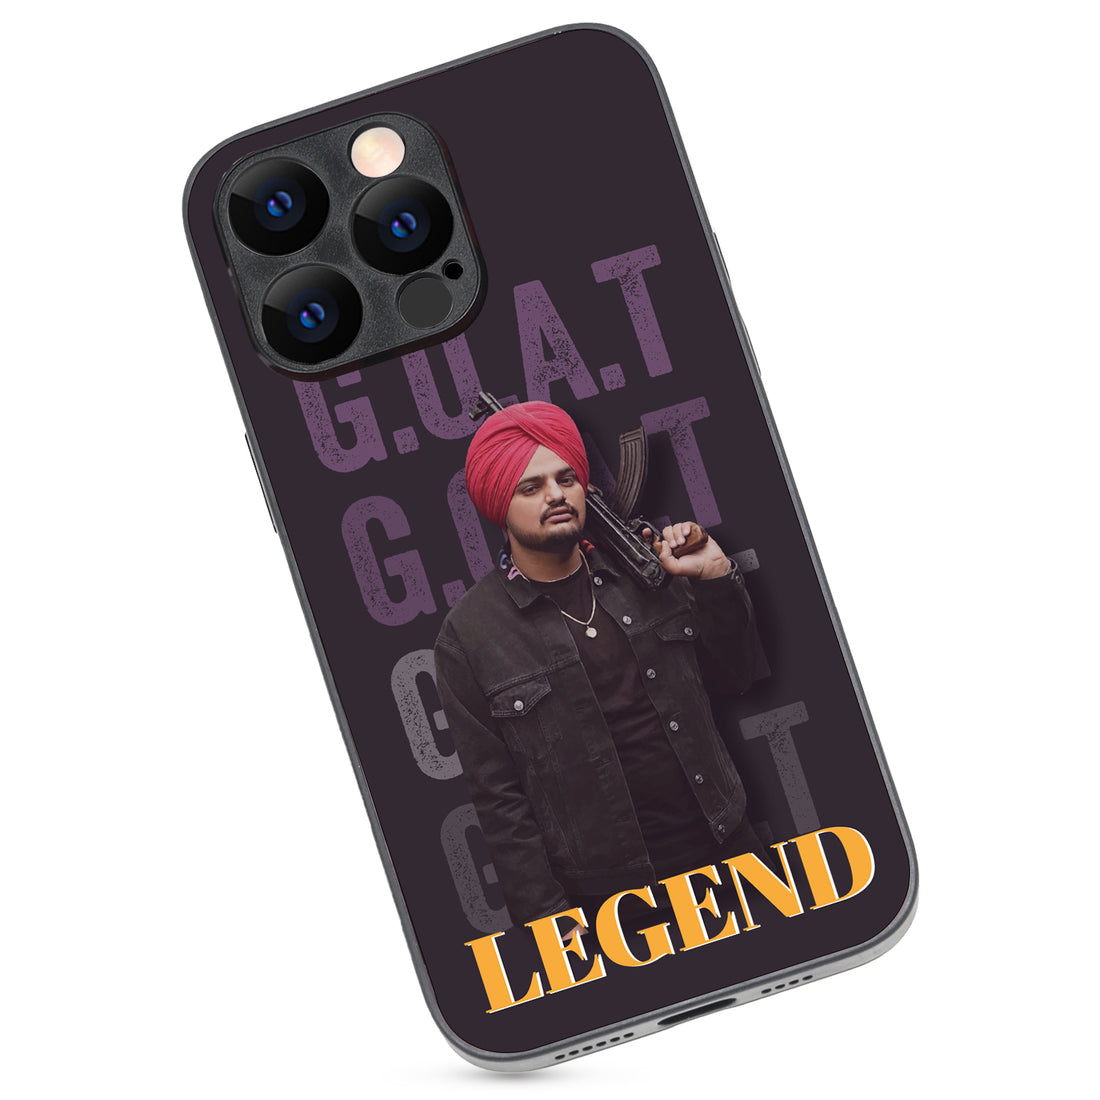 Legend Sidhu Moosewala iPhone 14 Pro Max Case